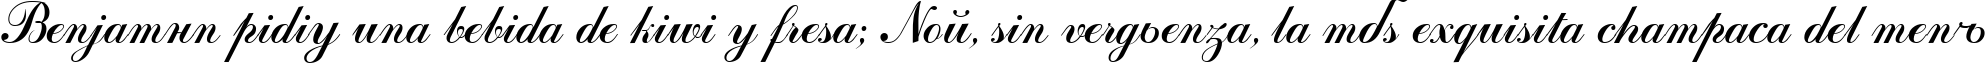 Пример написания шрифтом Calligraph текста на испанском